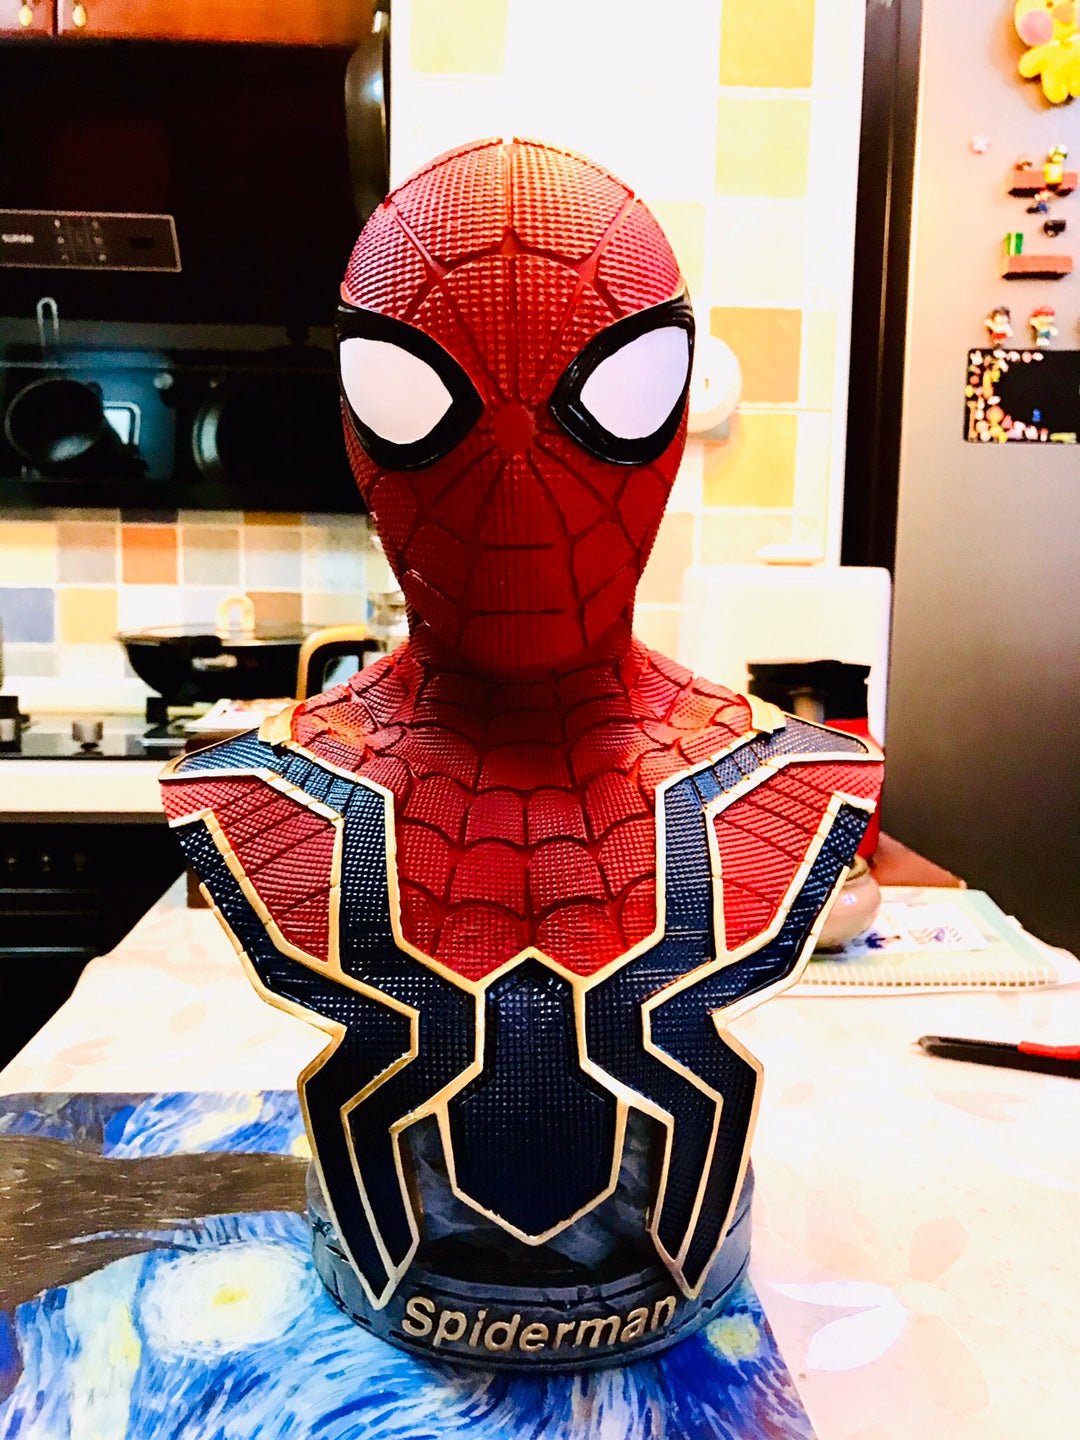 Spiderman Superhero Bust Desktop Portrait Statue - Home Decor Gifts and More